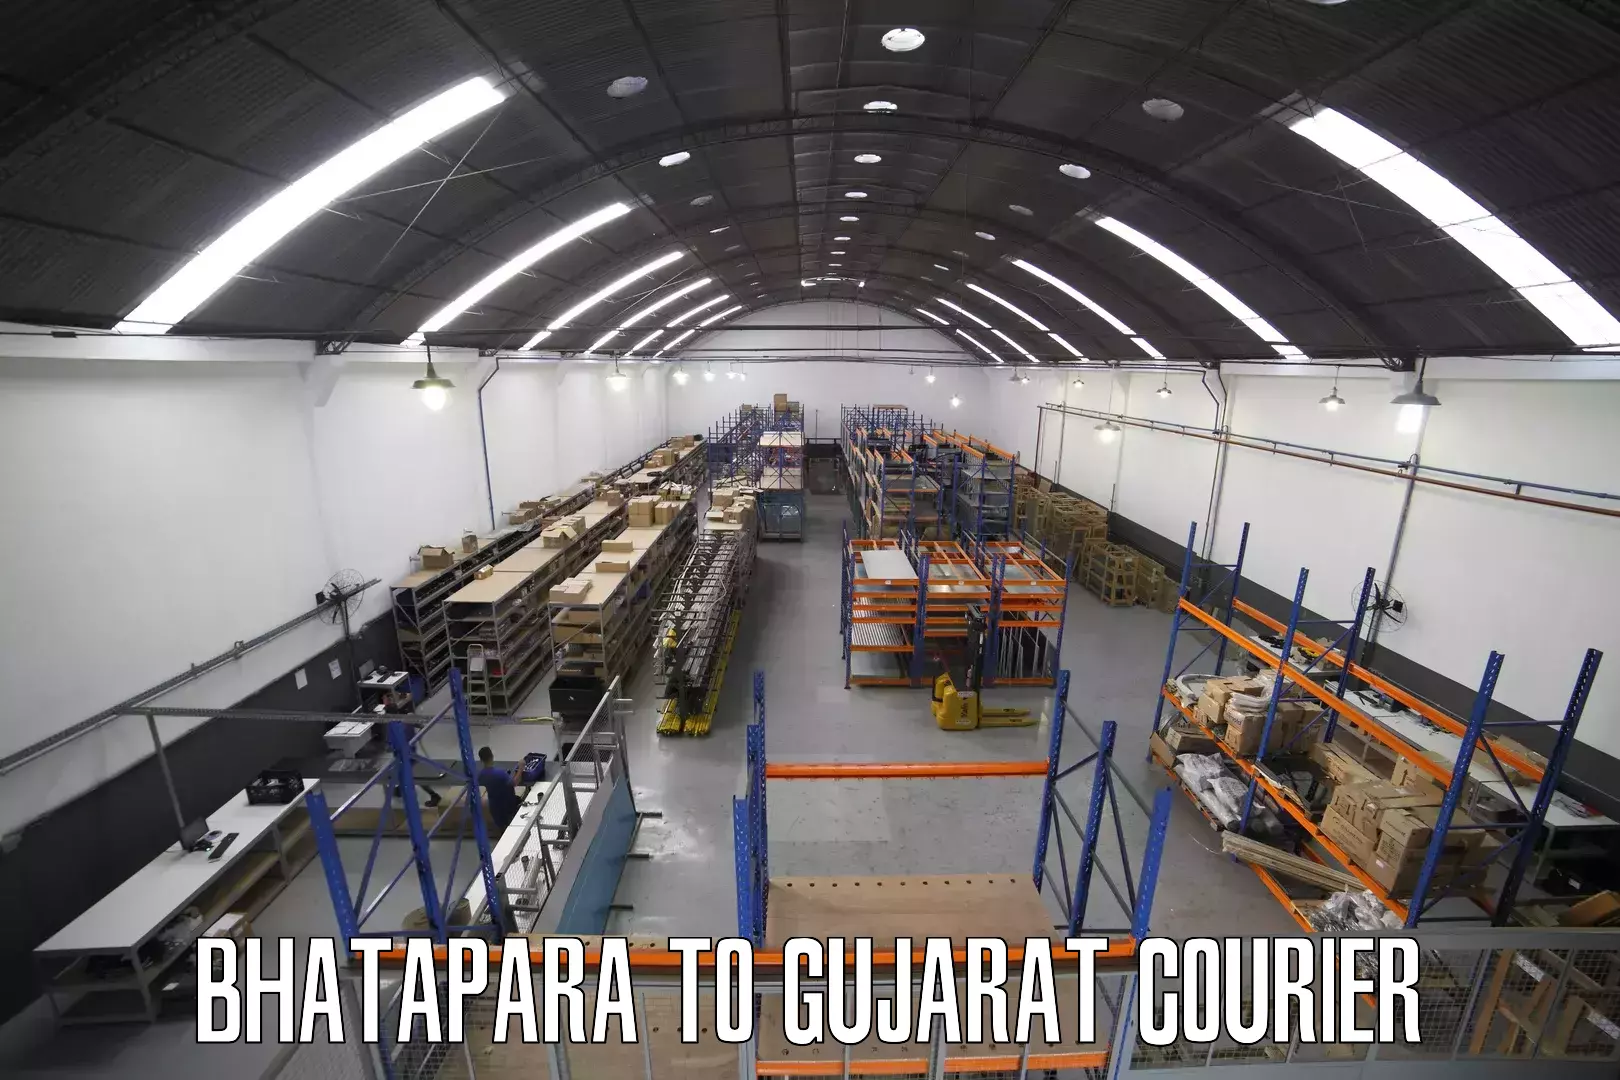 Nationwide delivery network Bhatapara to Satlasana